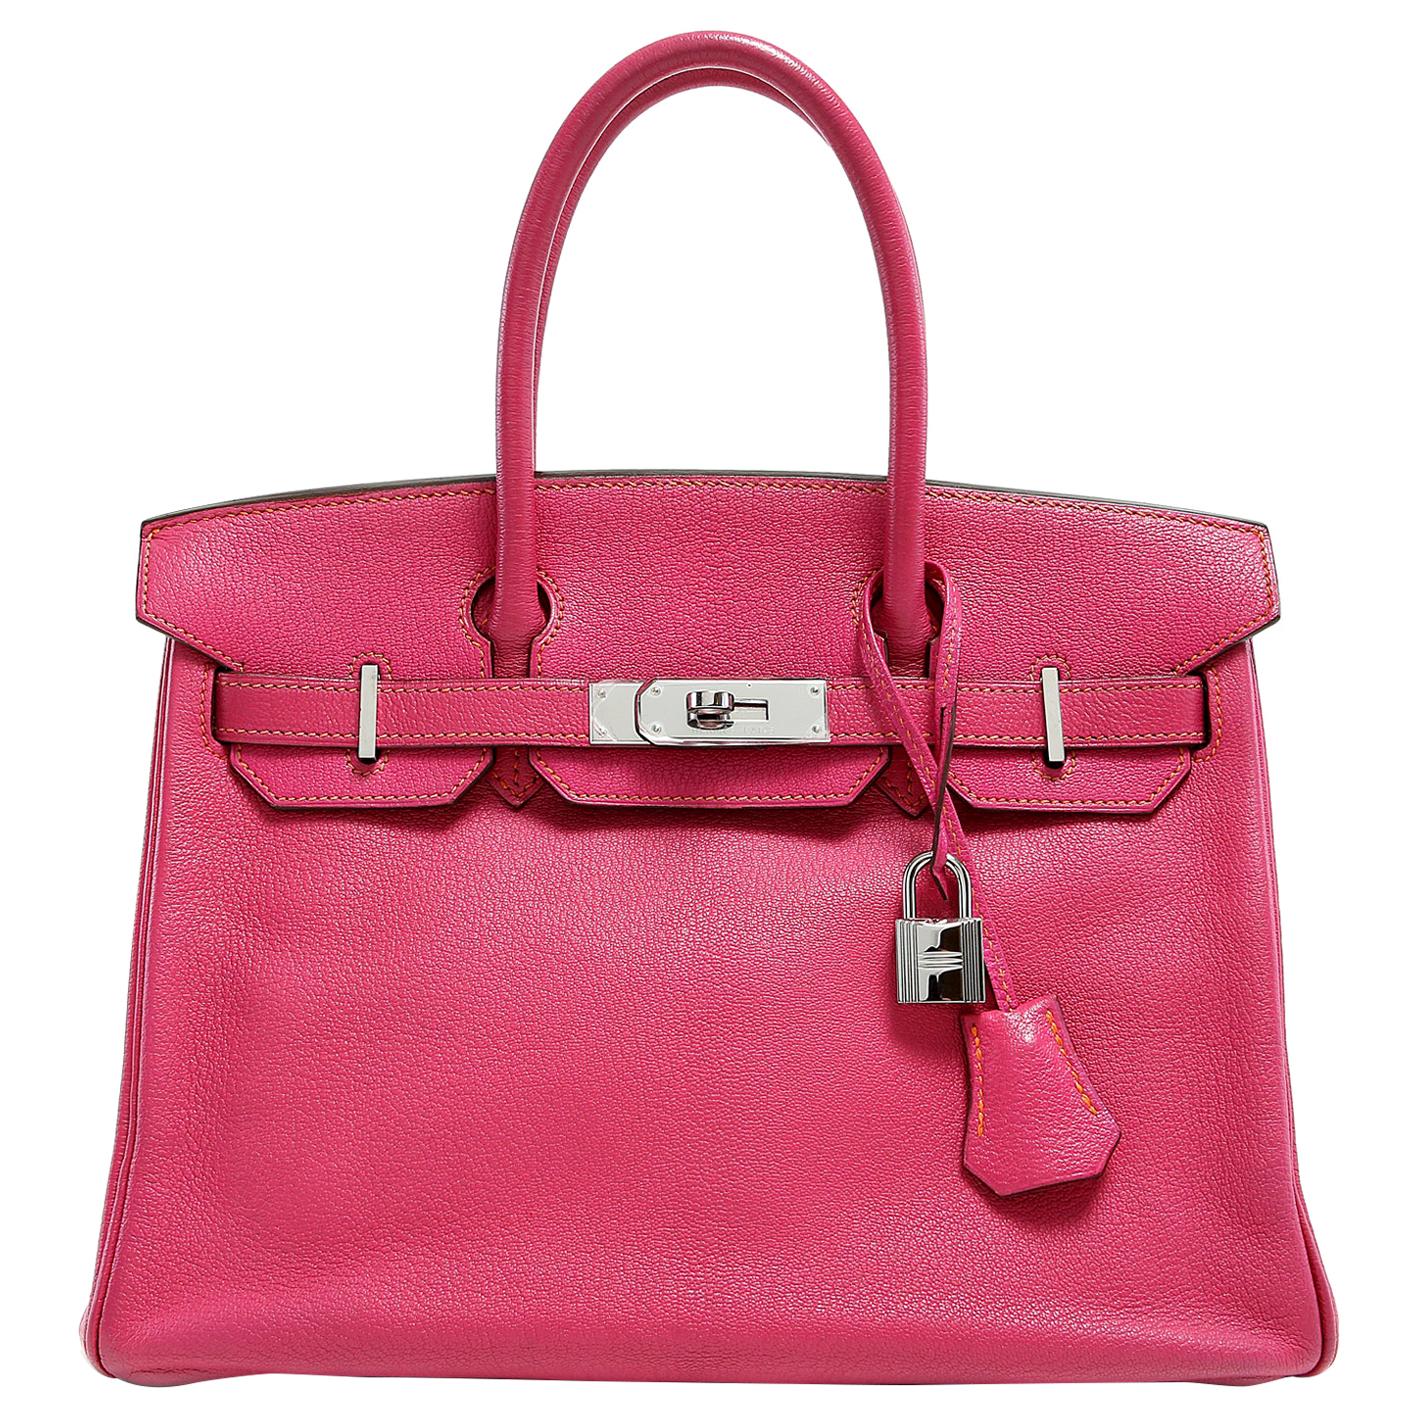 Hermès Rose Shocking Chevre Leather 30 cm Birkin Bag